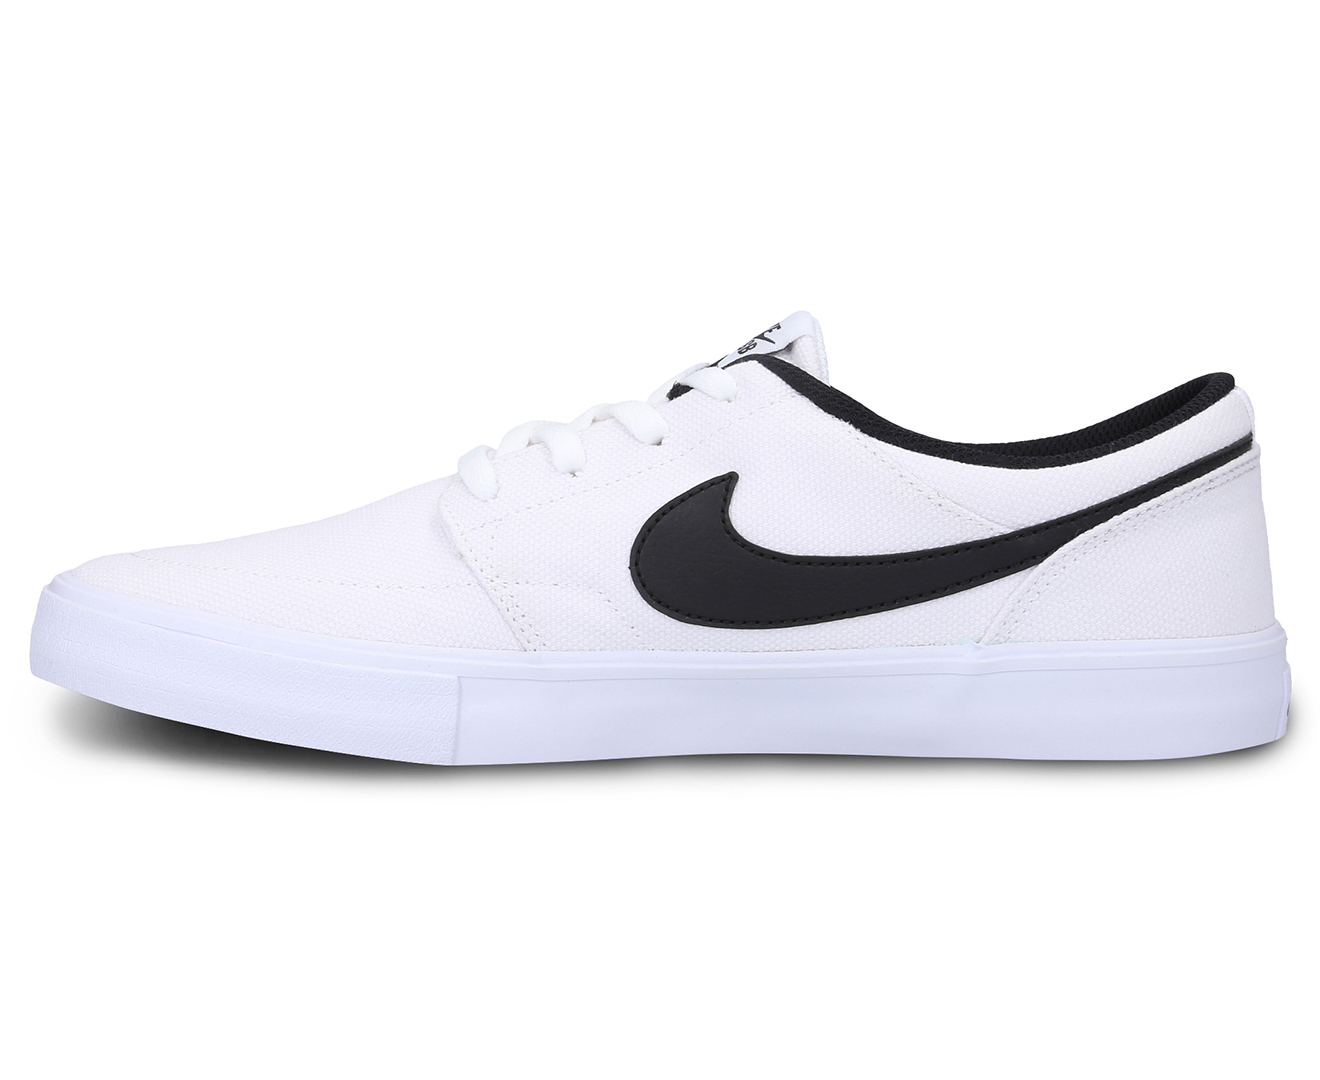 Nike SB Men's Portmore II Solarsoft Canvas Skate Sneakers - White/Black ...